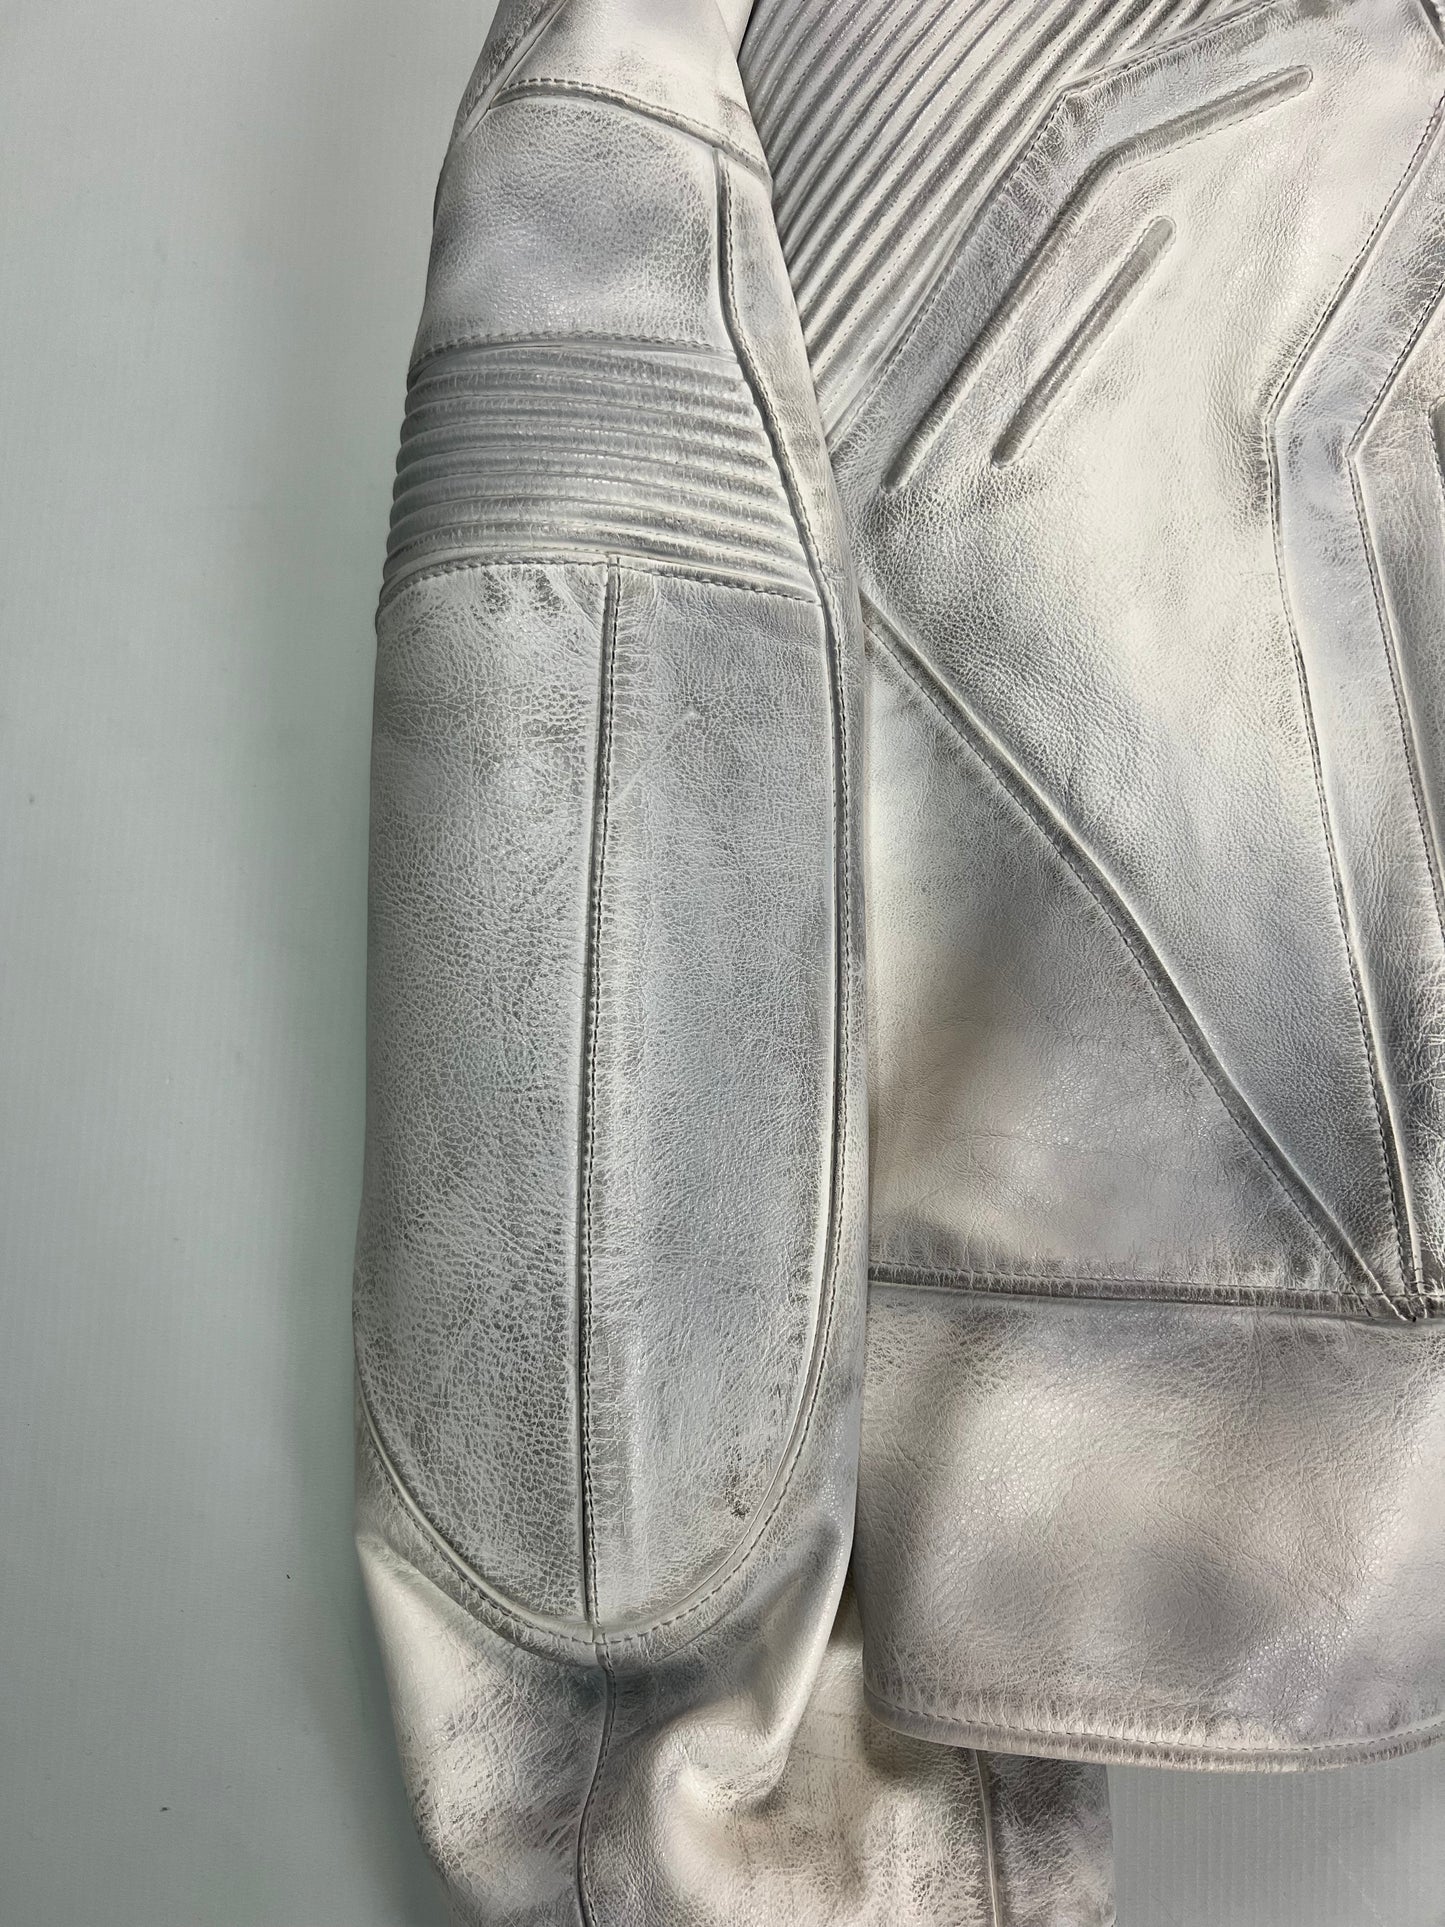 Balenciaga SS23 mudshow white Leather Jacket SZ:1